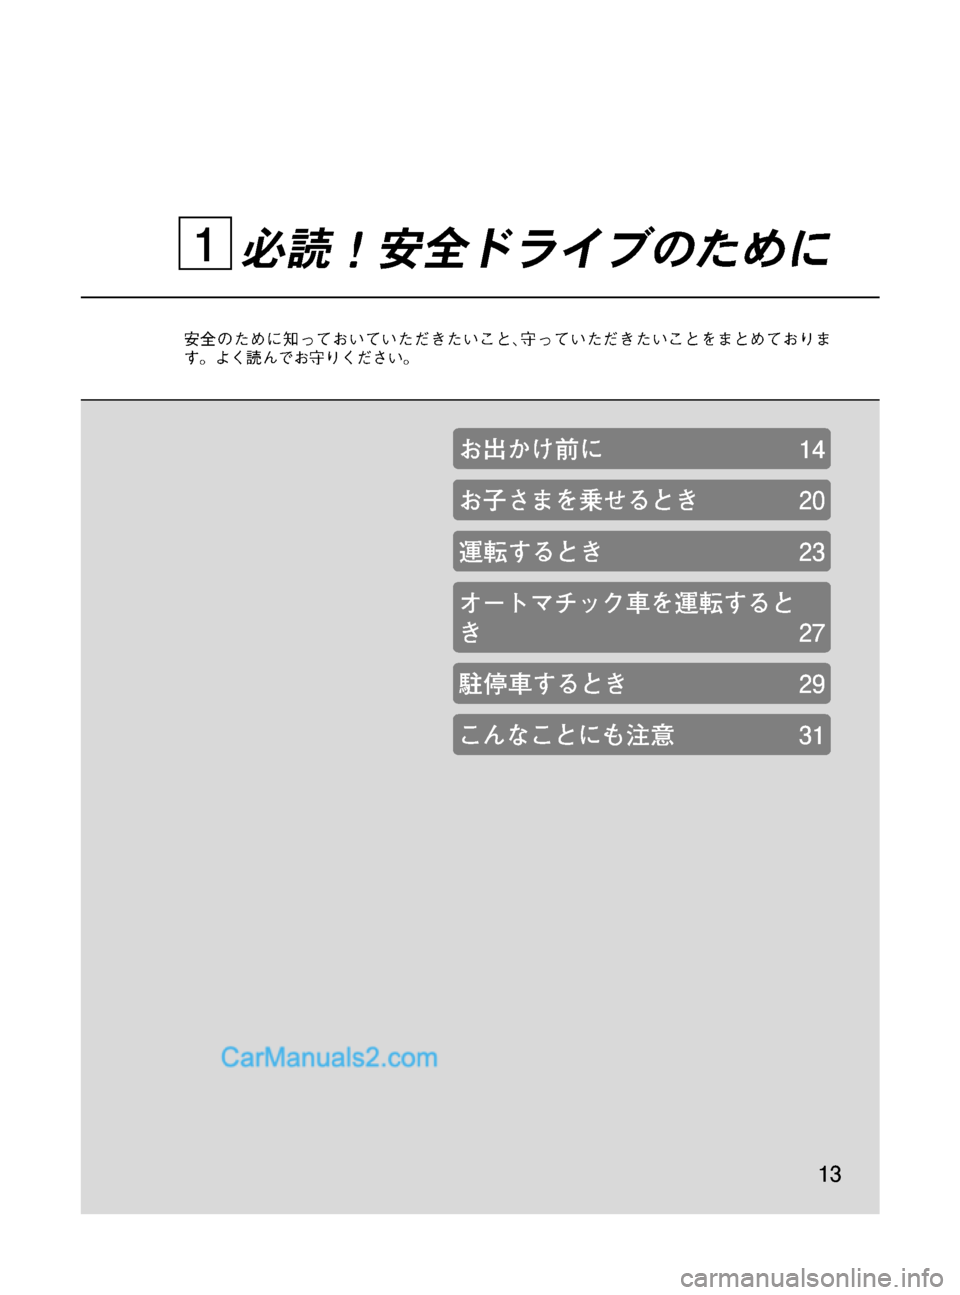 MAZDA MODEL VERISA 2007  ベリーサ｜取扱説明書 (in Japanese) Black plate (13,1)
必読！安全ドライブのために
安全のために知っておいていただきたいこと､守っていただきたいことをまとめておりま
す。よく読ん�